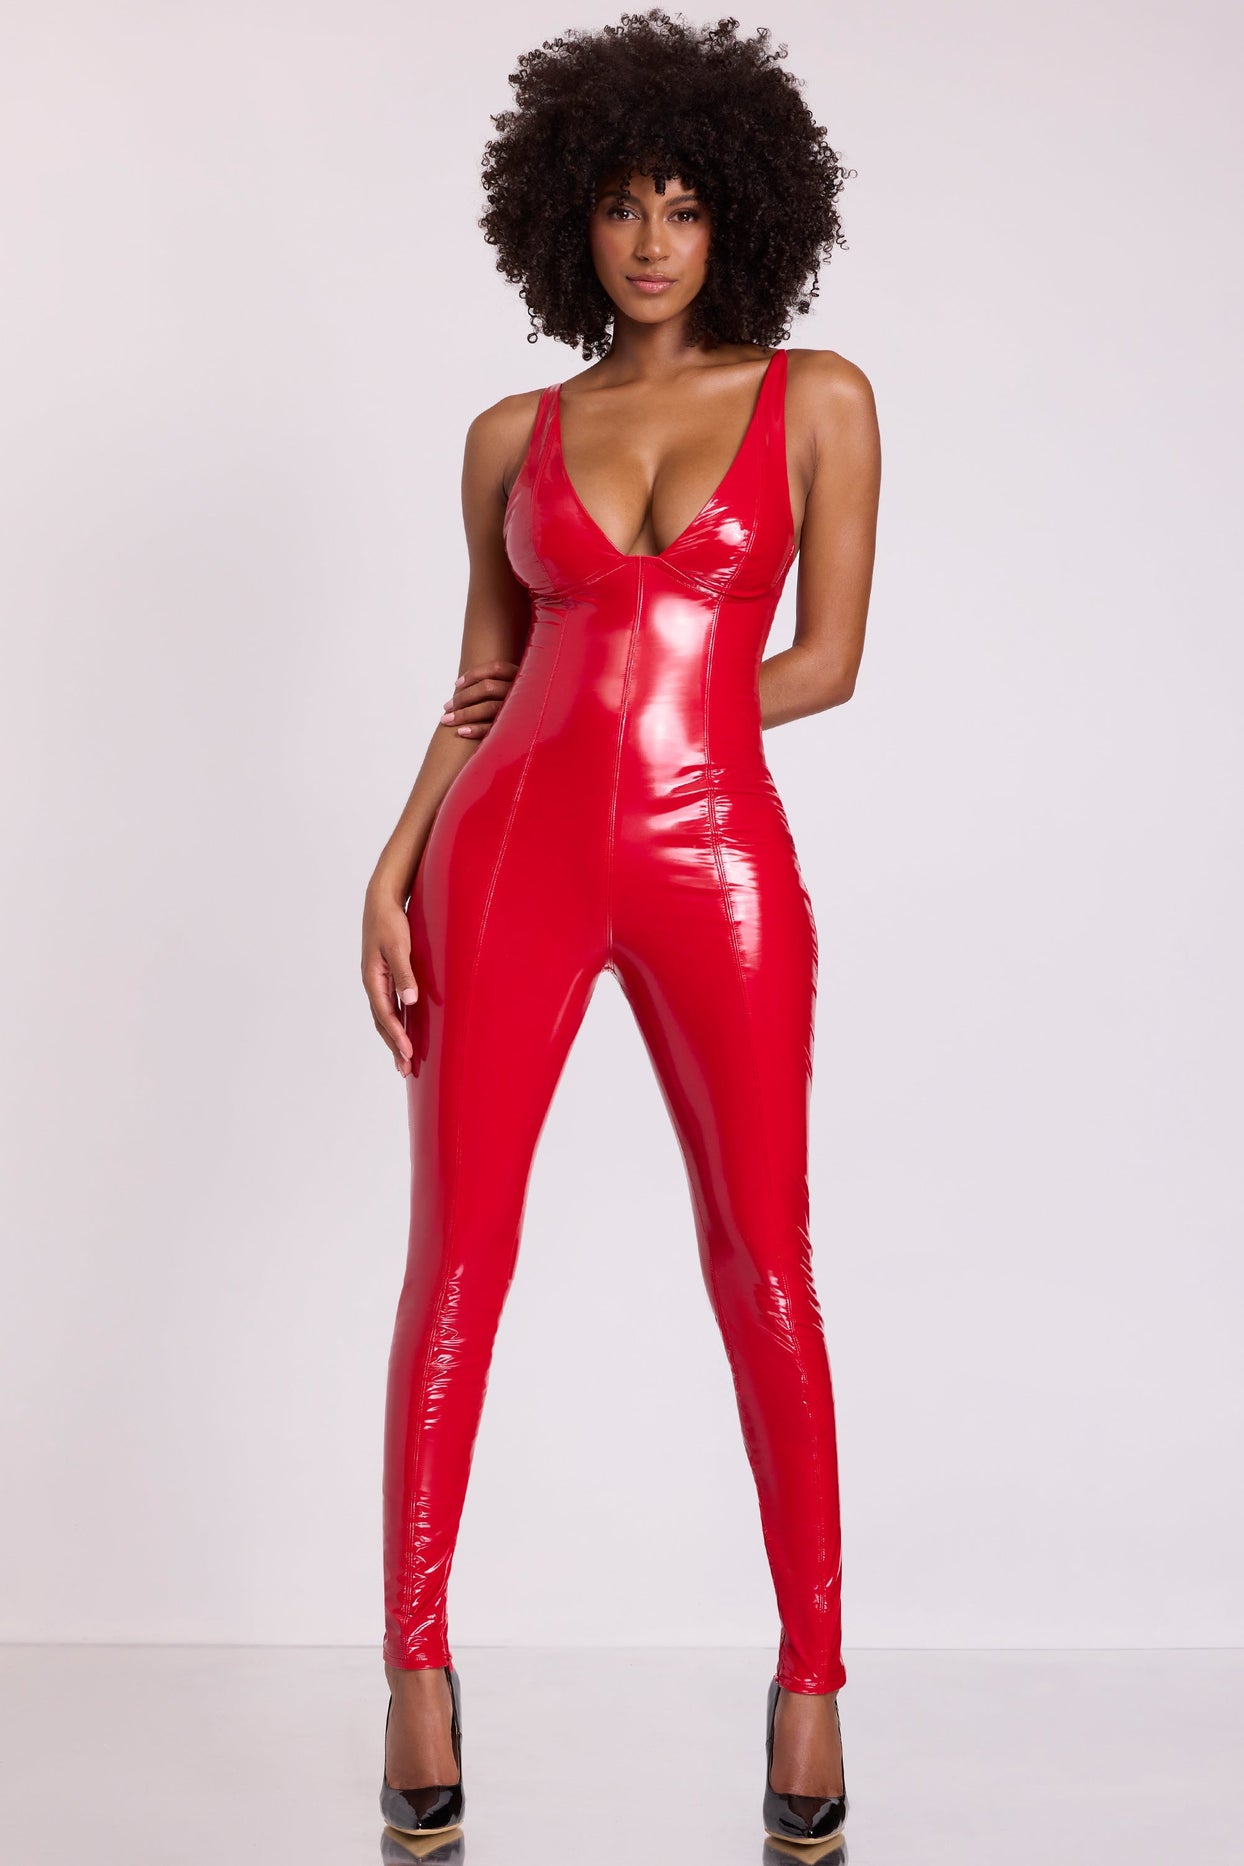 Fashion Women Faux Leather Jumpsuit Latex Catsuit Romper Metallic